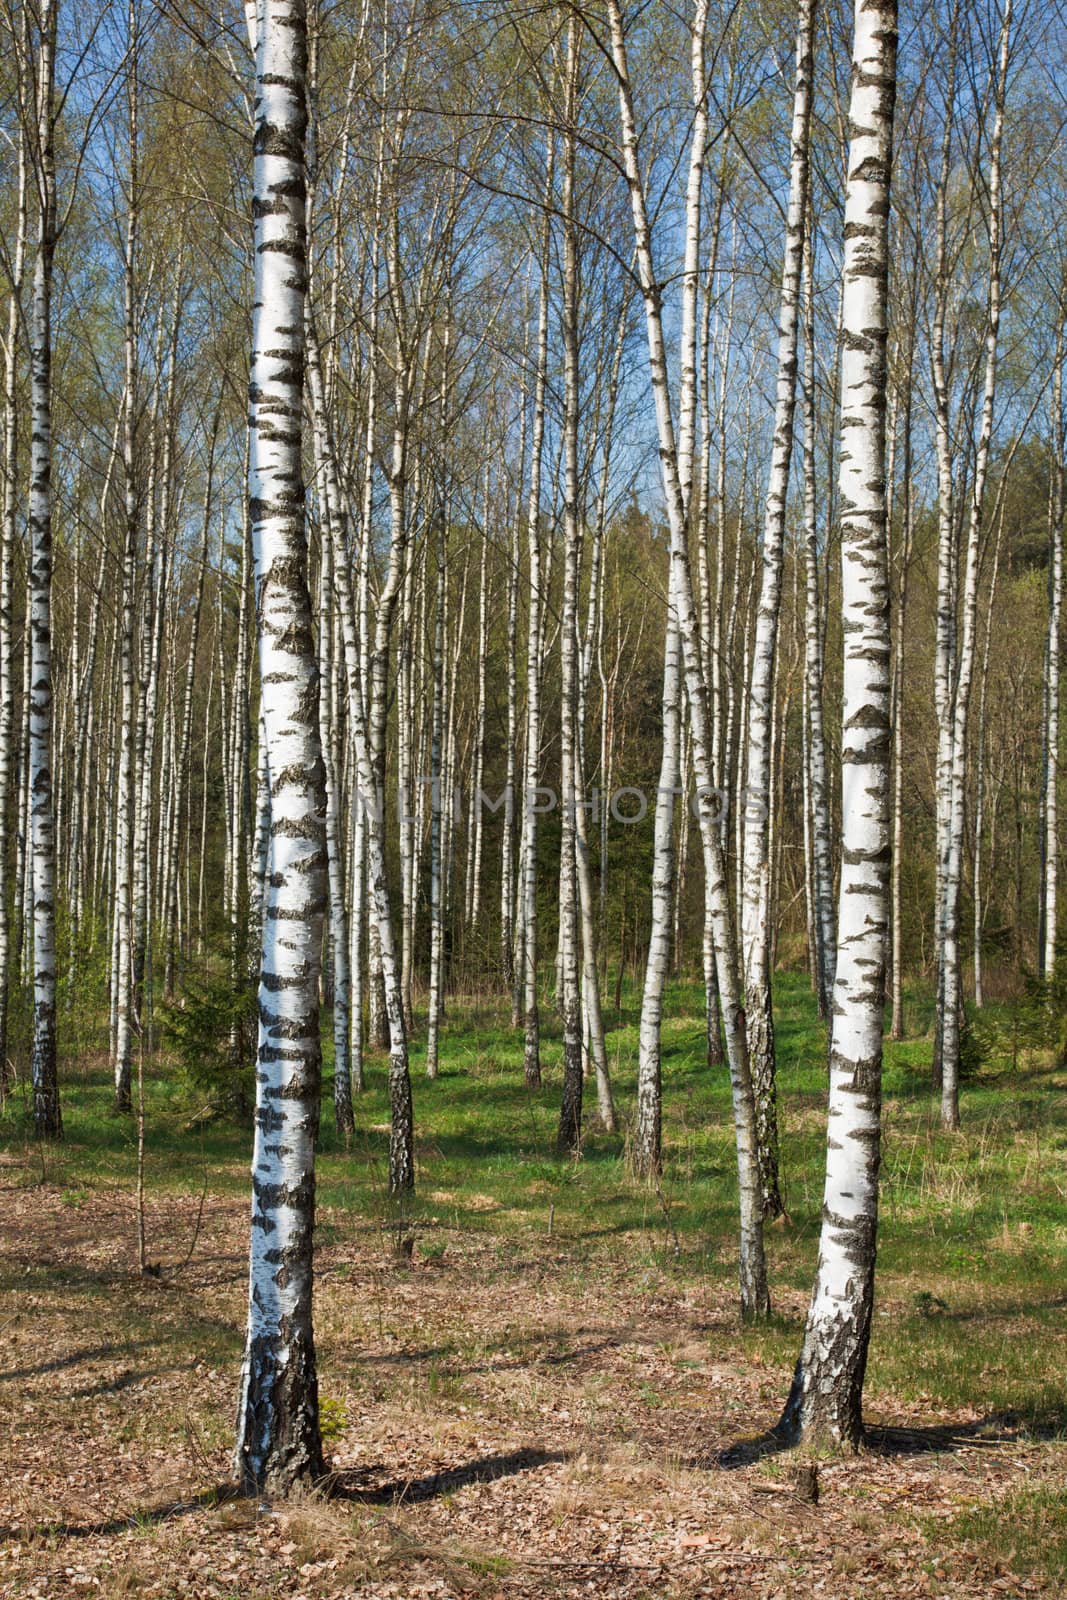 Birch grove in spring